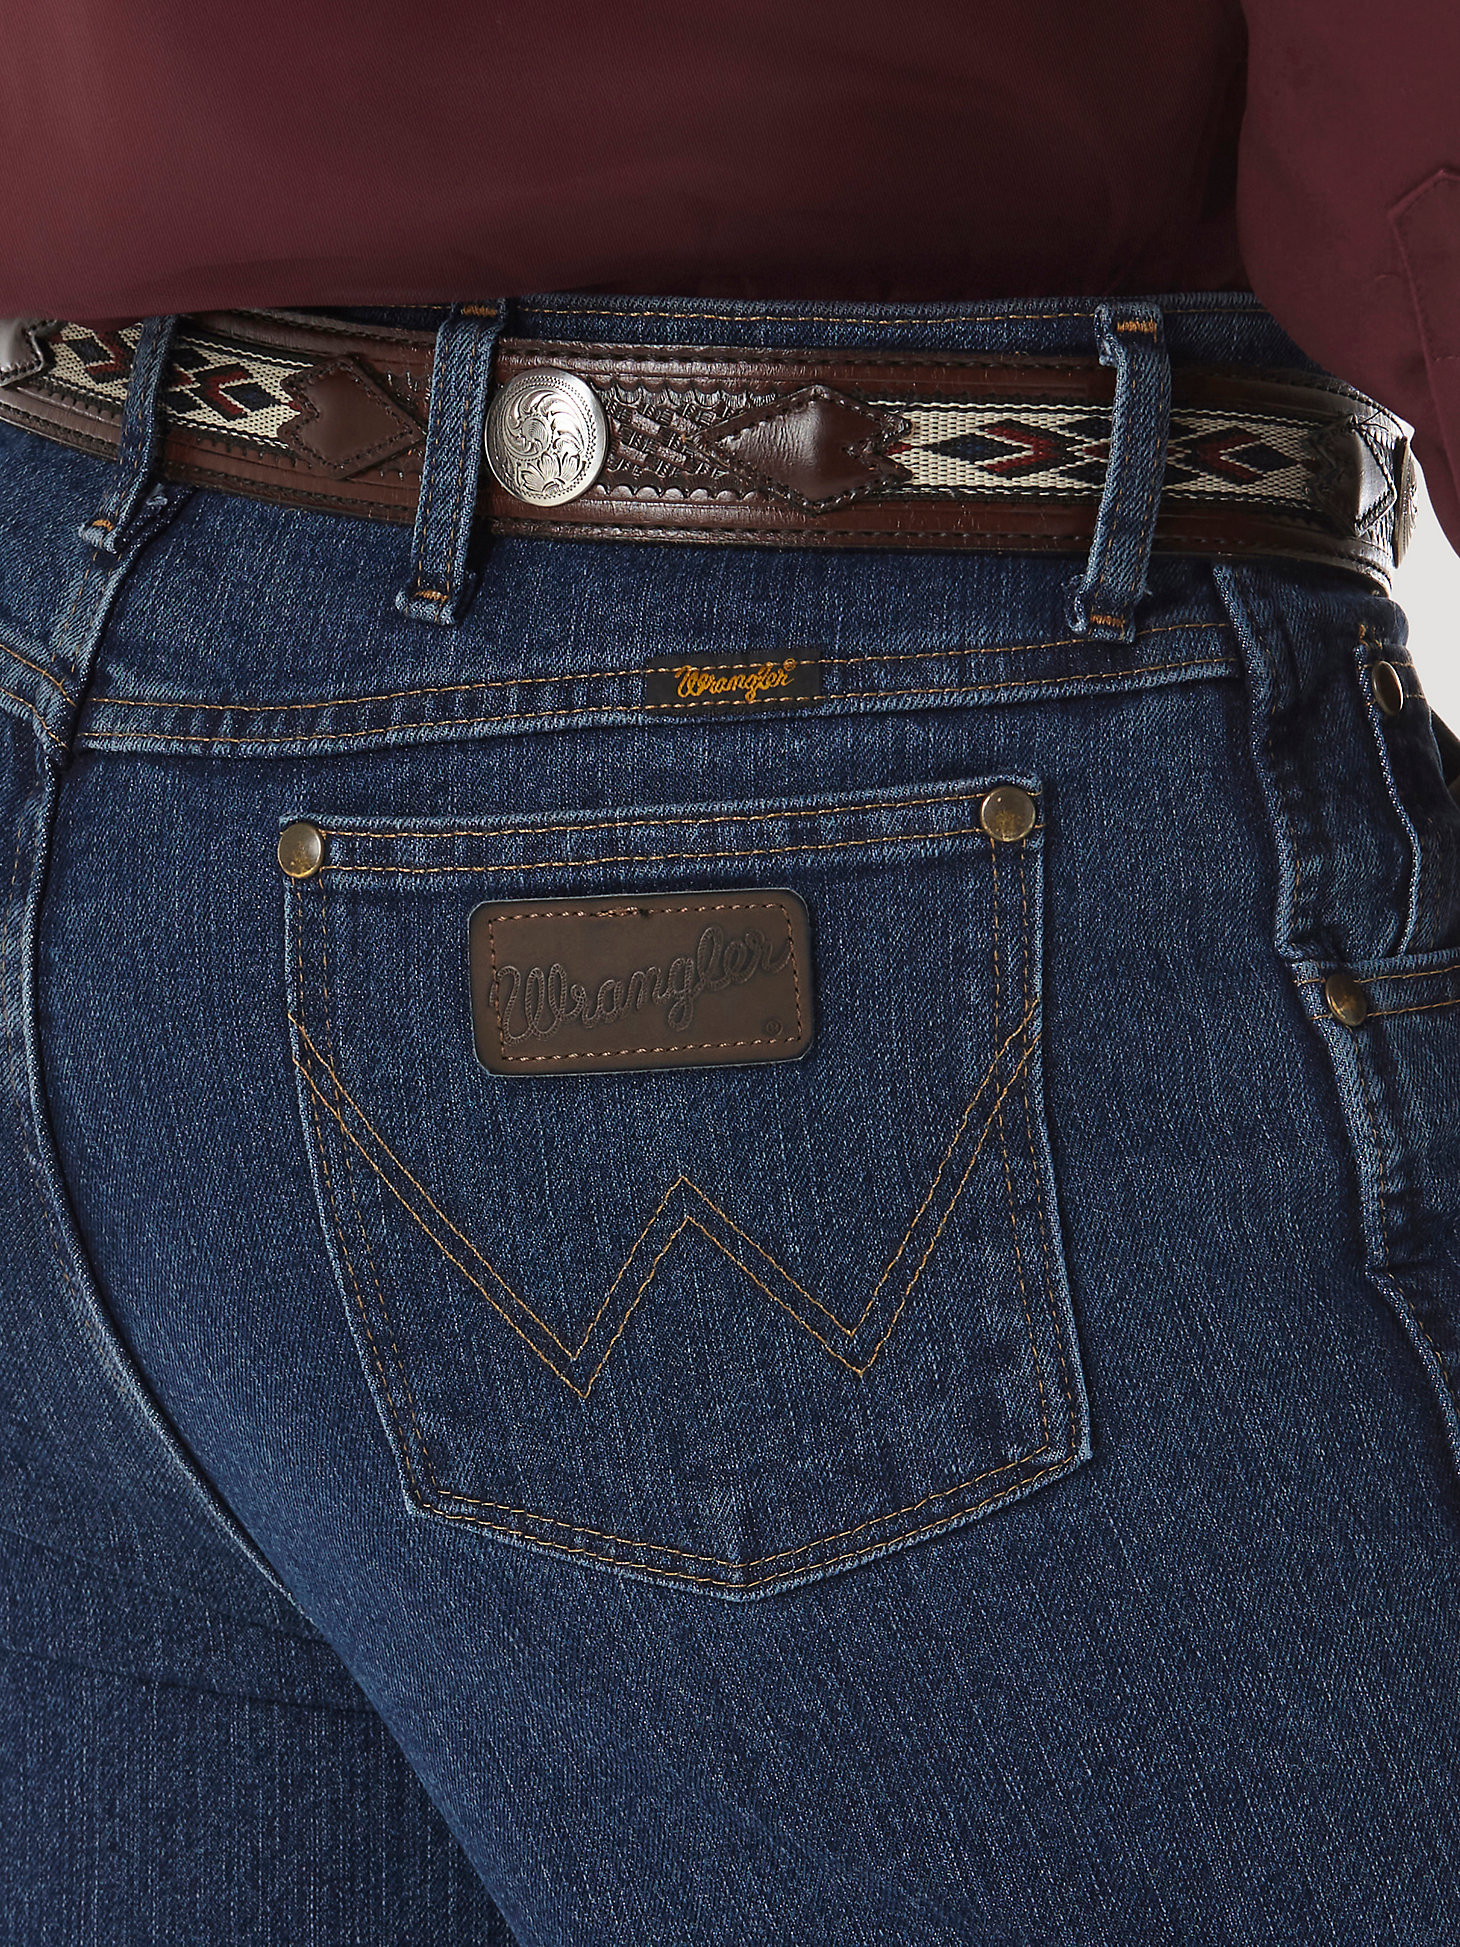 Premium Performance Advanced Comfort Cowboy Cut® Slim Fit Jean in MS Wash alternative view 3